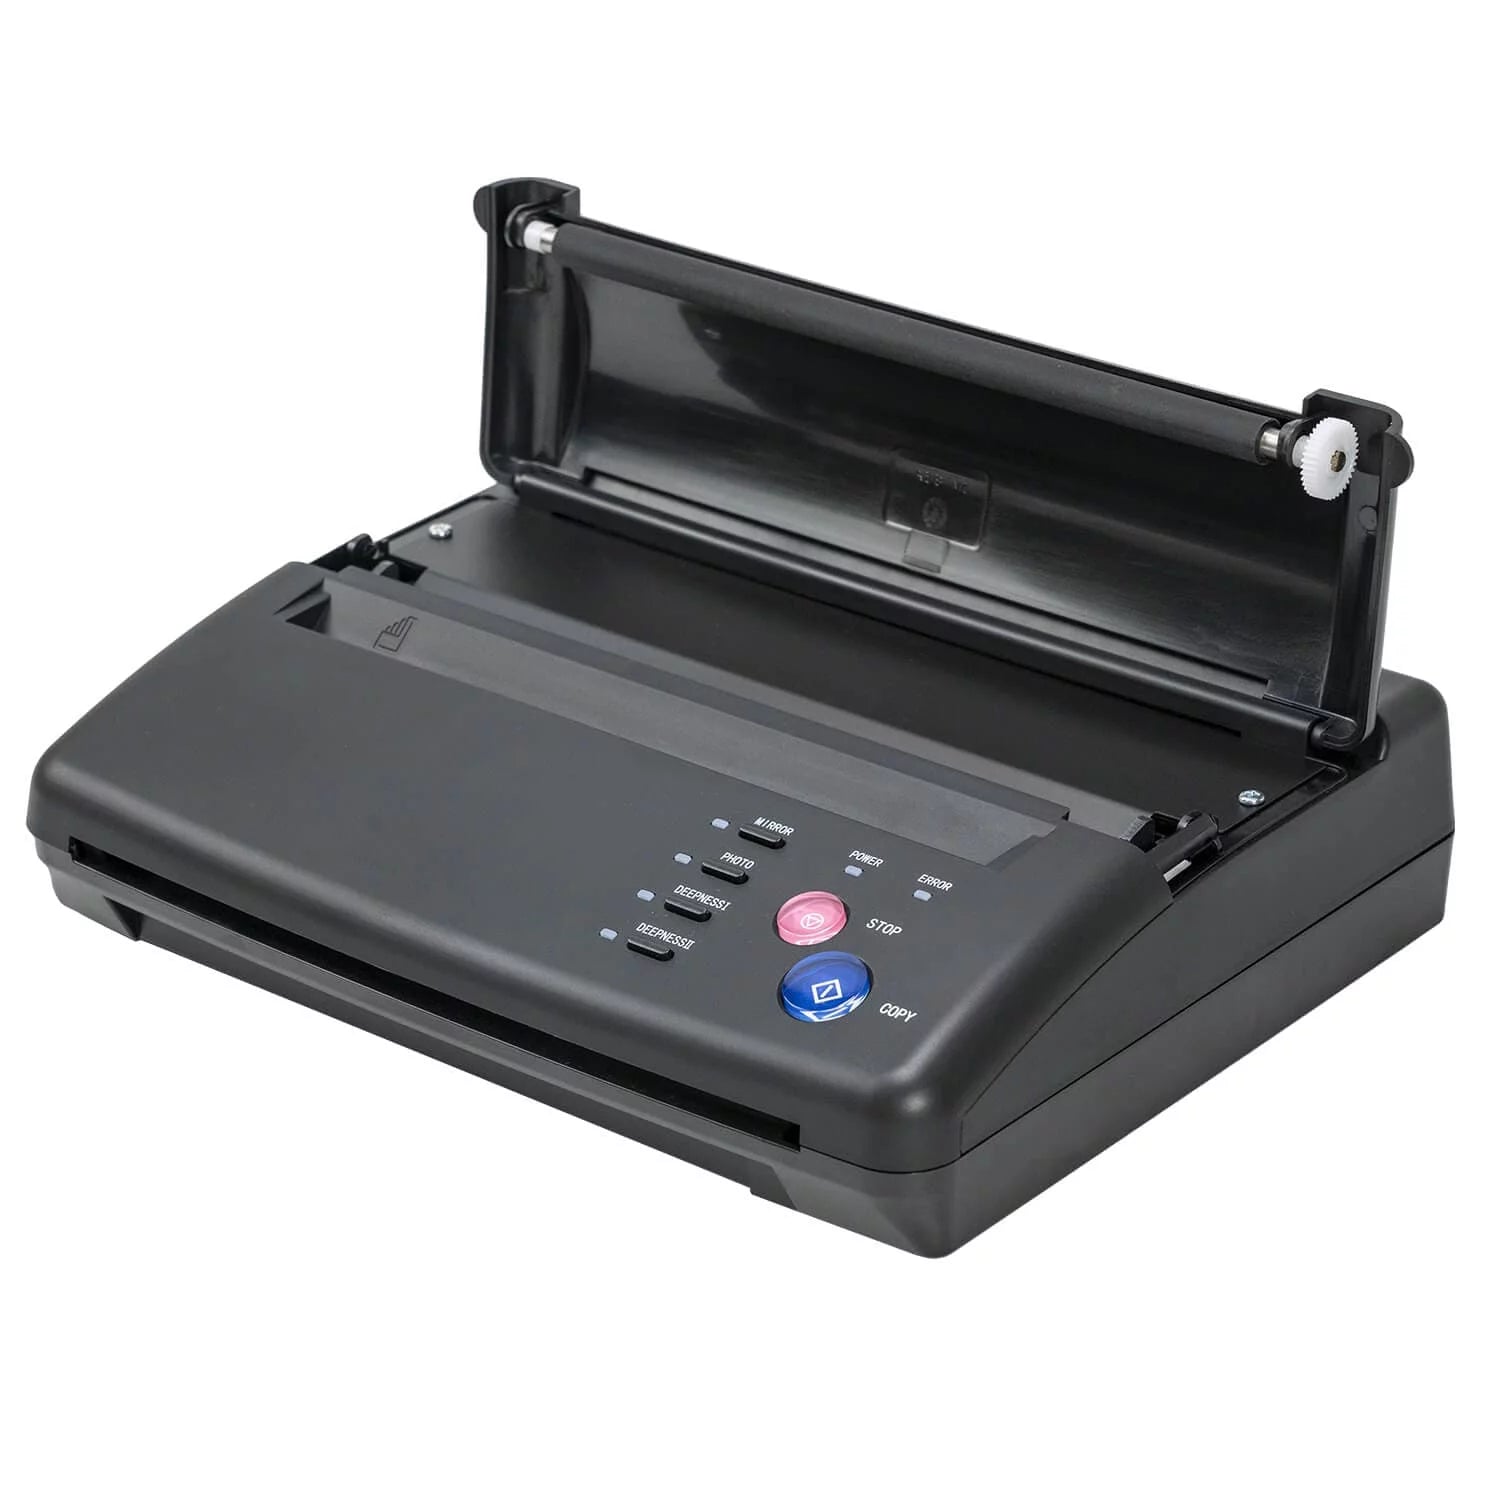 USB Tattoo Transfer Copier Printer Machine Thermal Stencil Paper Maker  Bluetooth | eBay